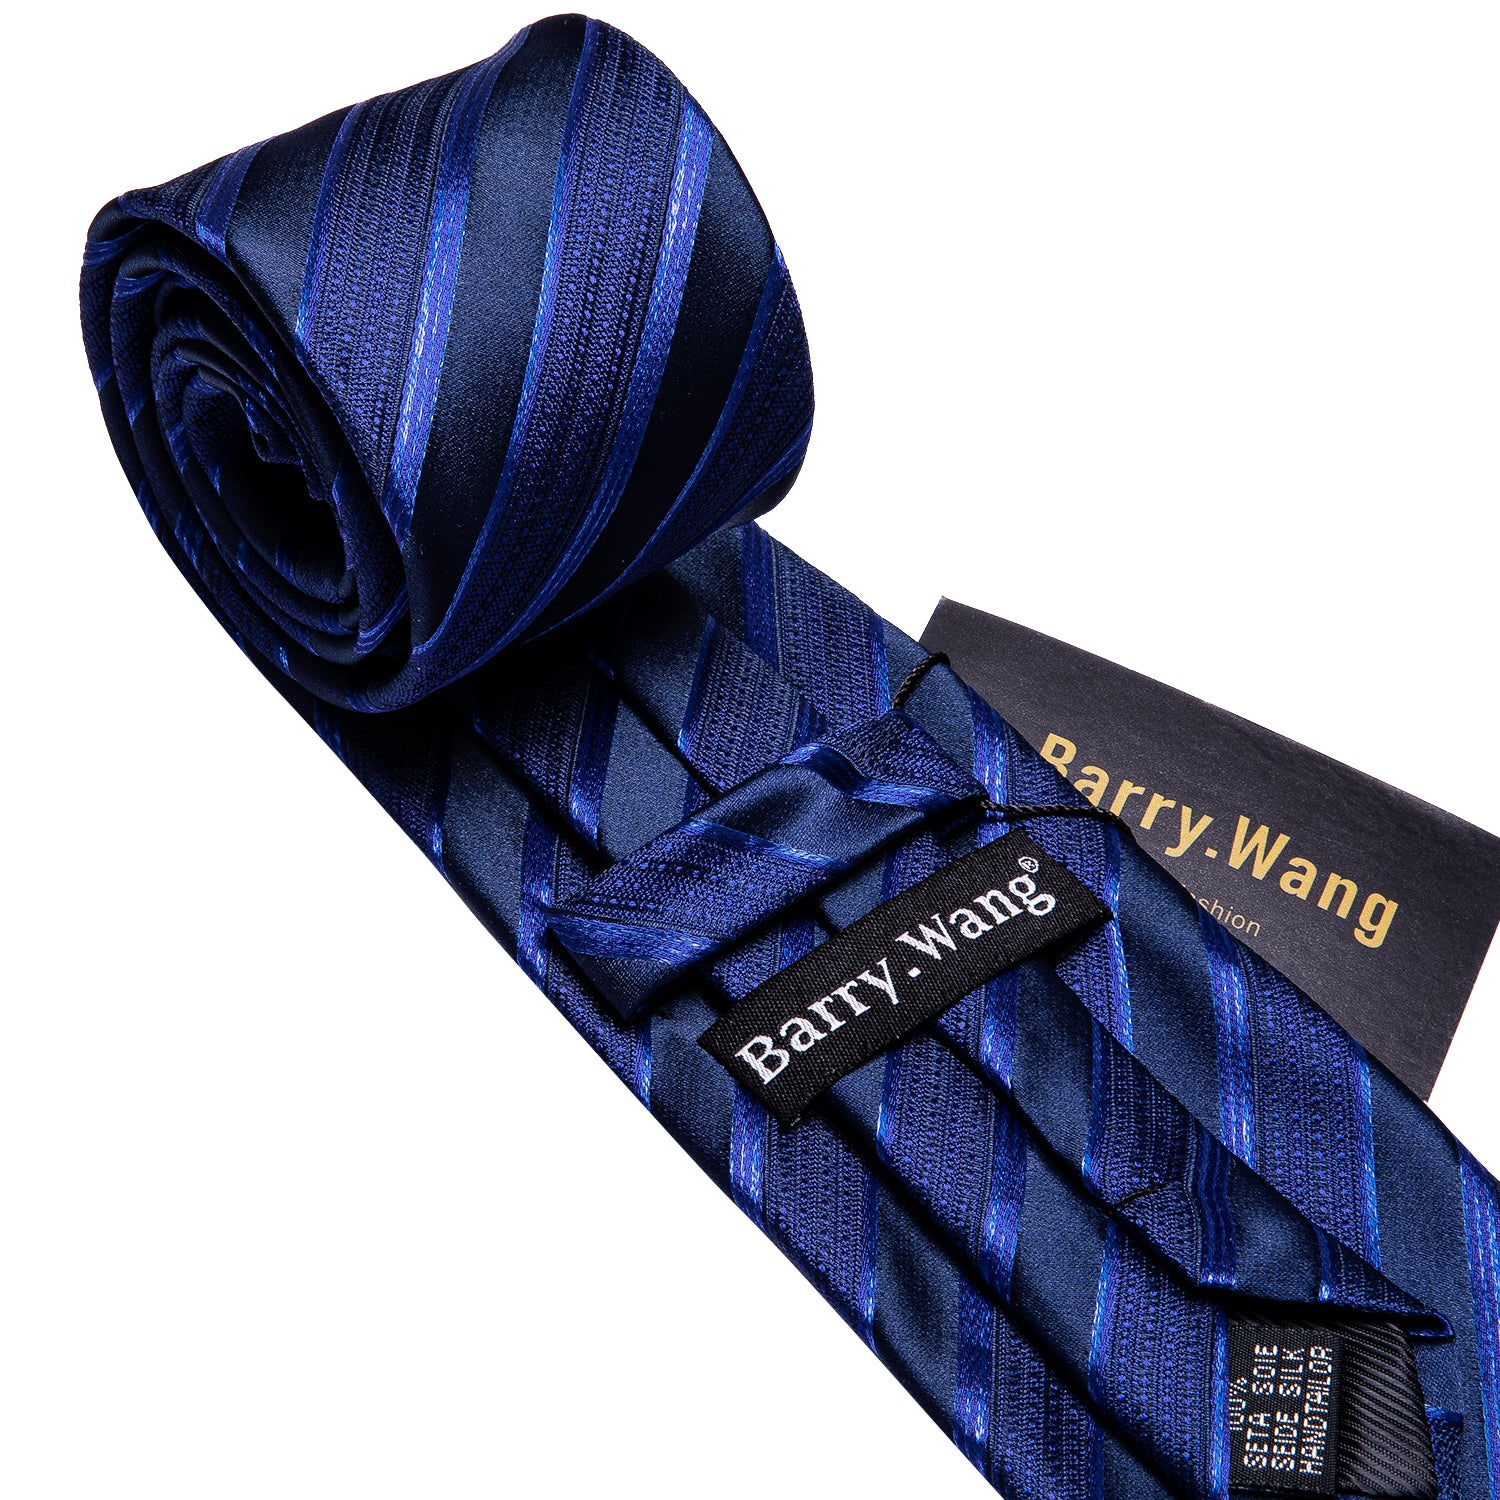 Classy Blue Striped Men's Tie Pocket Square Cufflinks Set